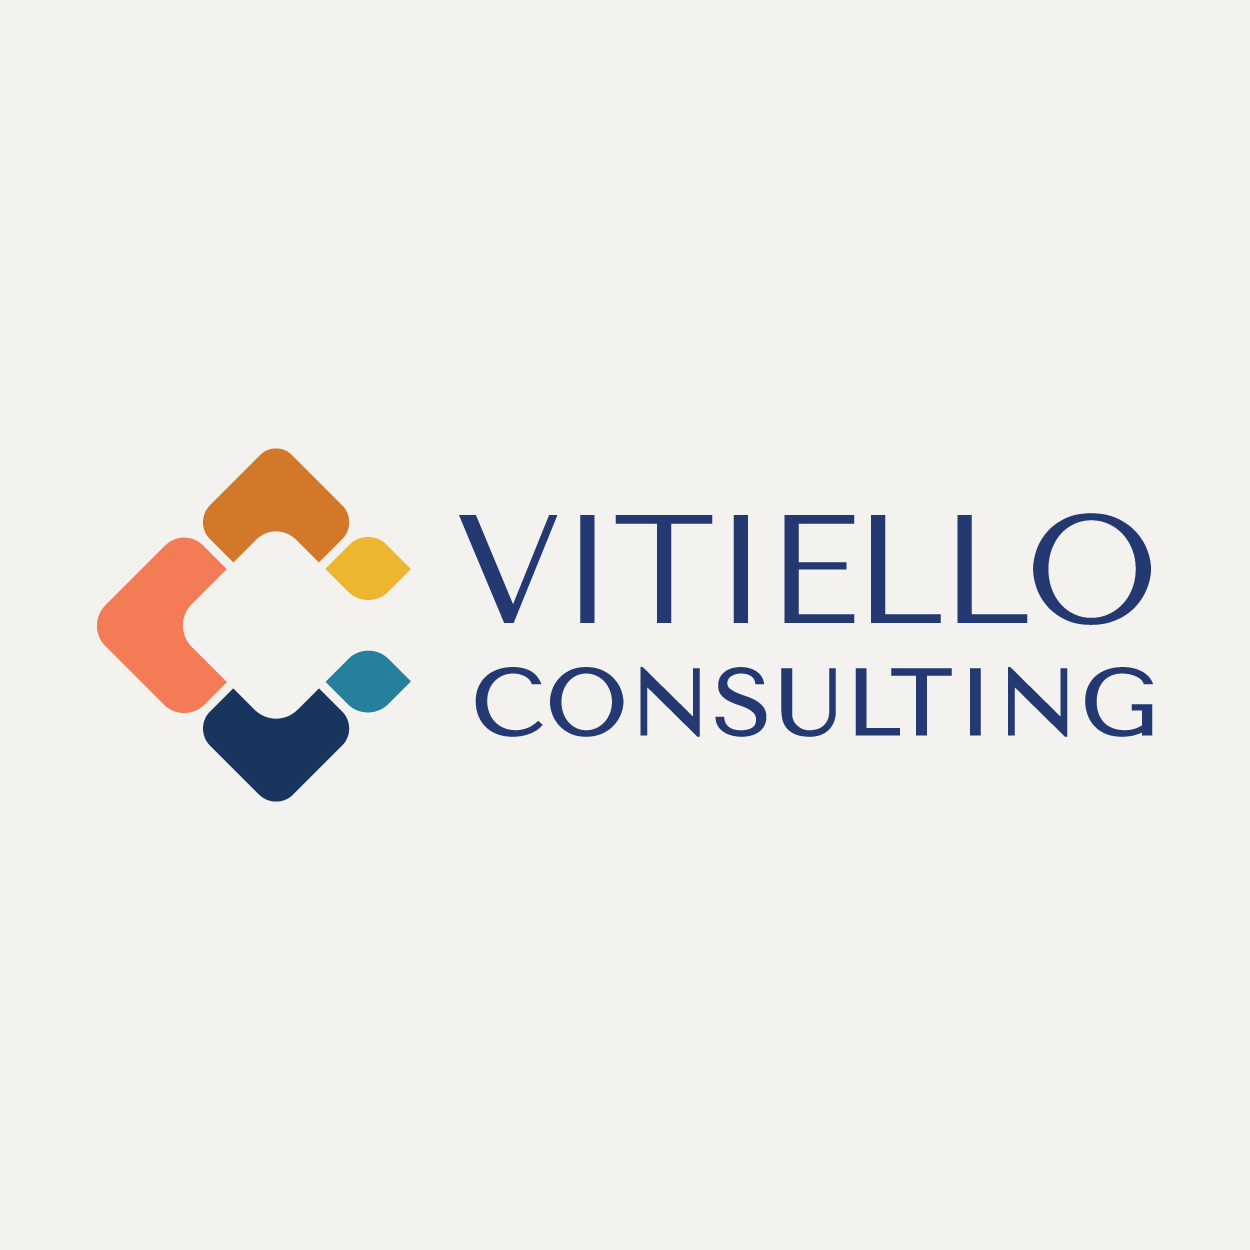 vitiello-consulting-logo.png